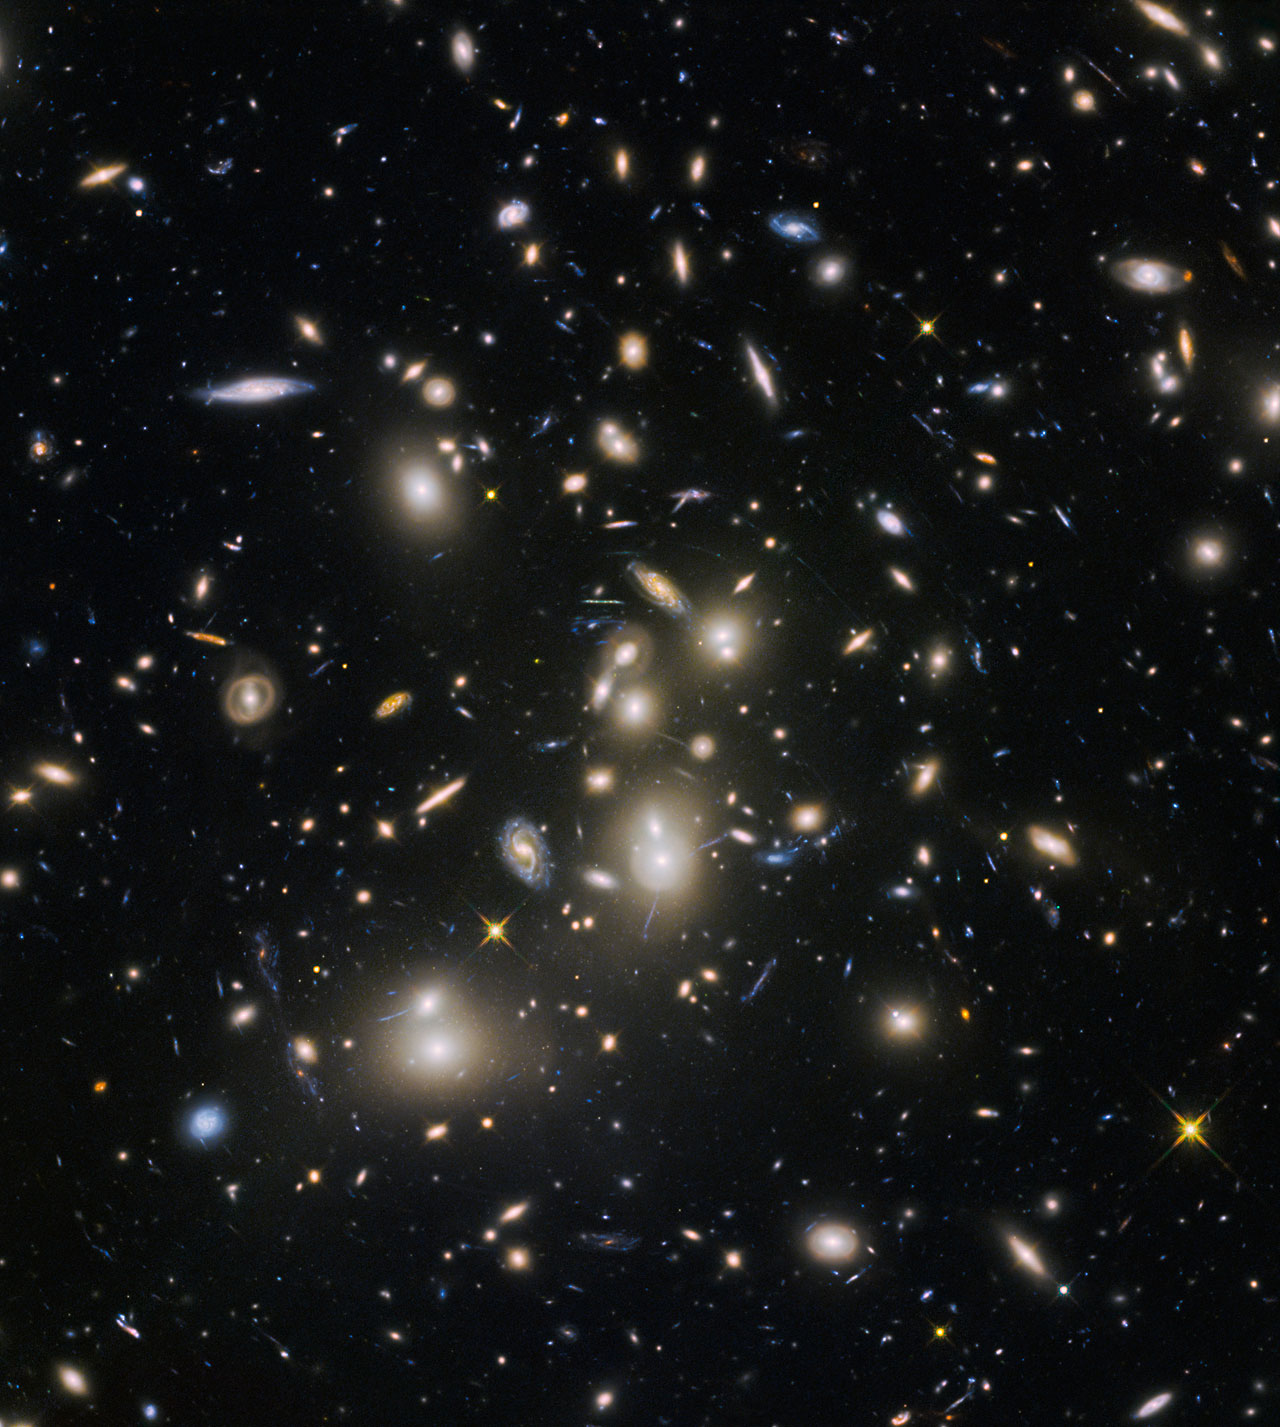 Wider view showing galaxy cluster Abell 2744. Image Credit: NASA/ESA/HST Frontier Fields team (STScI)